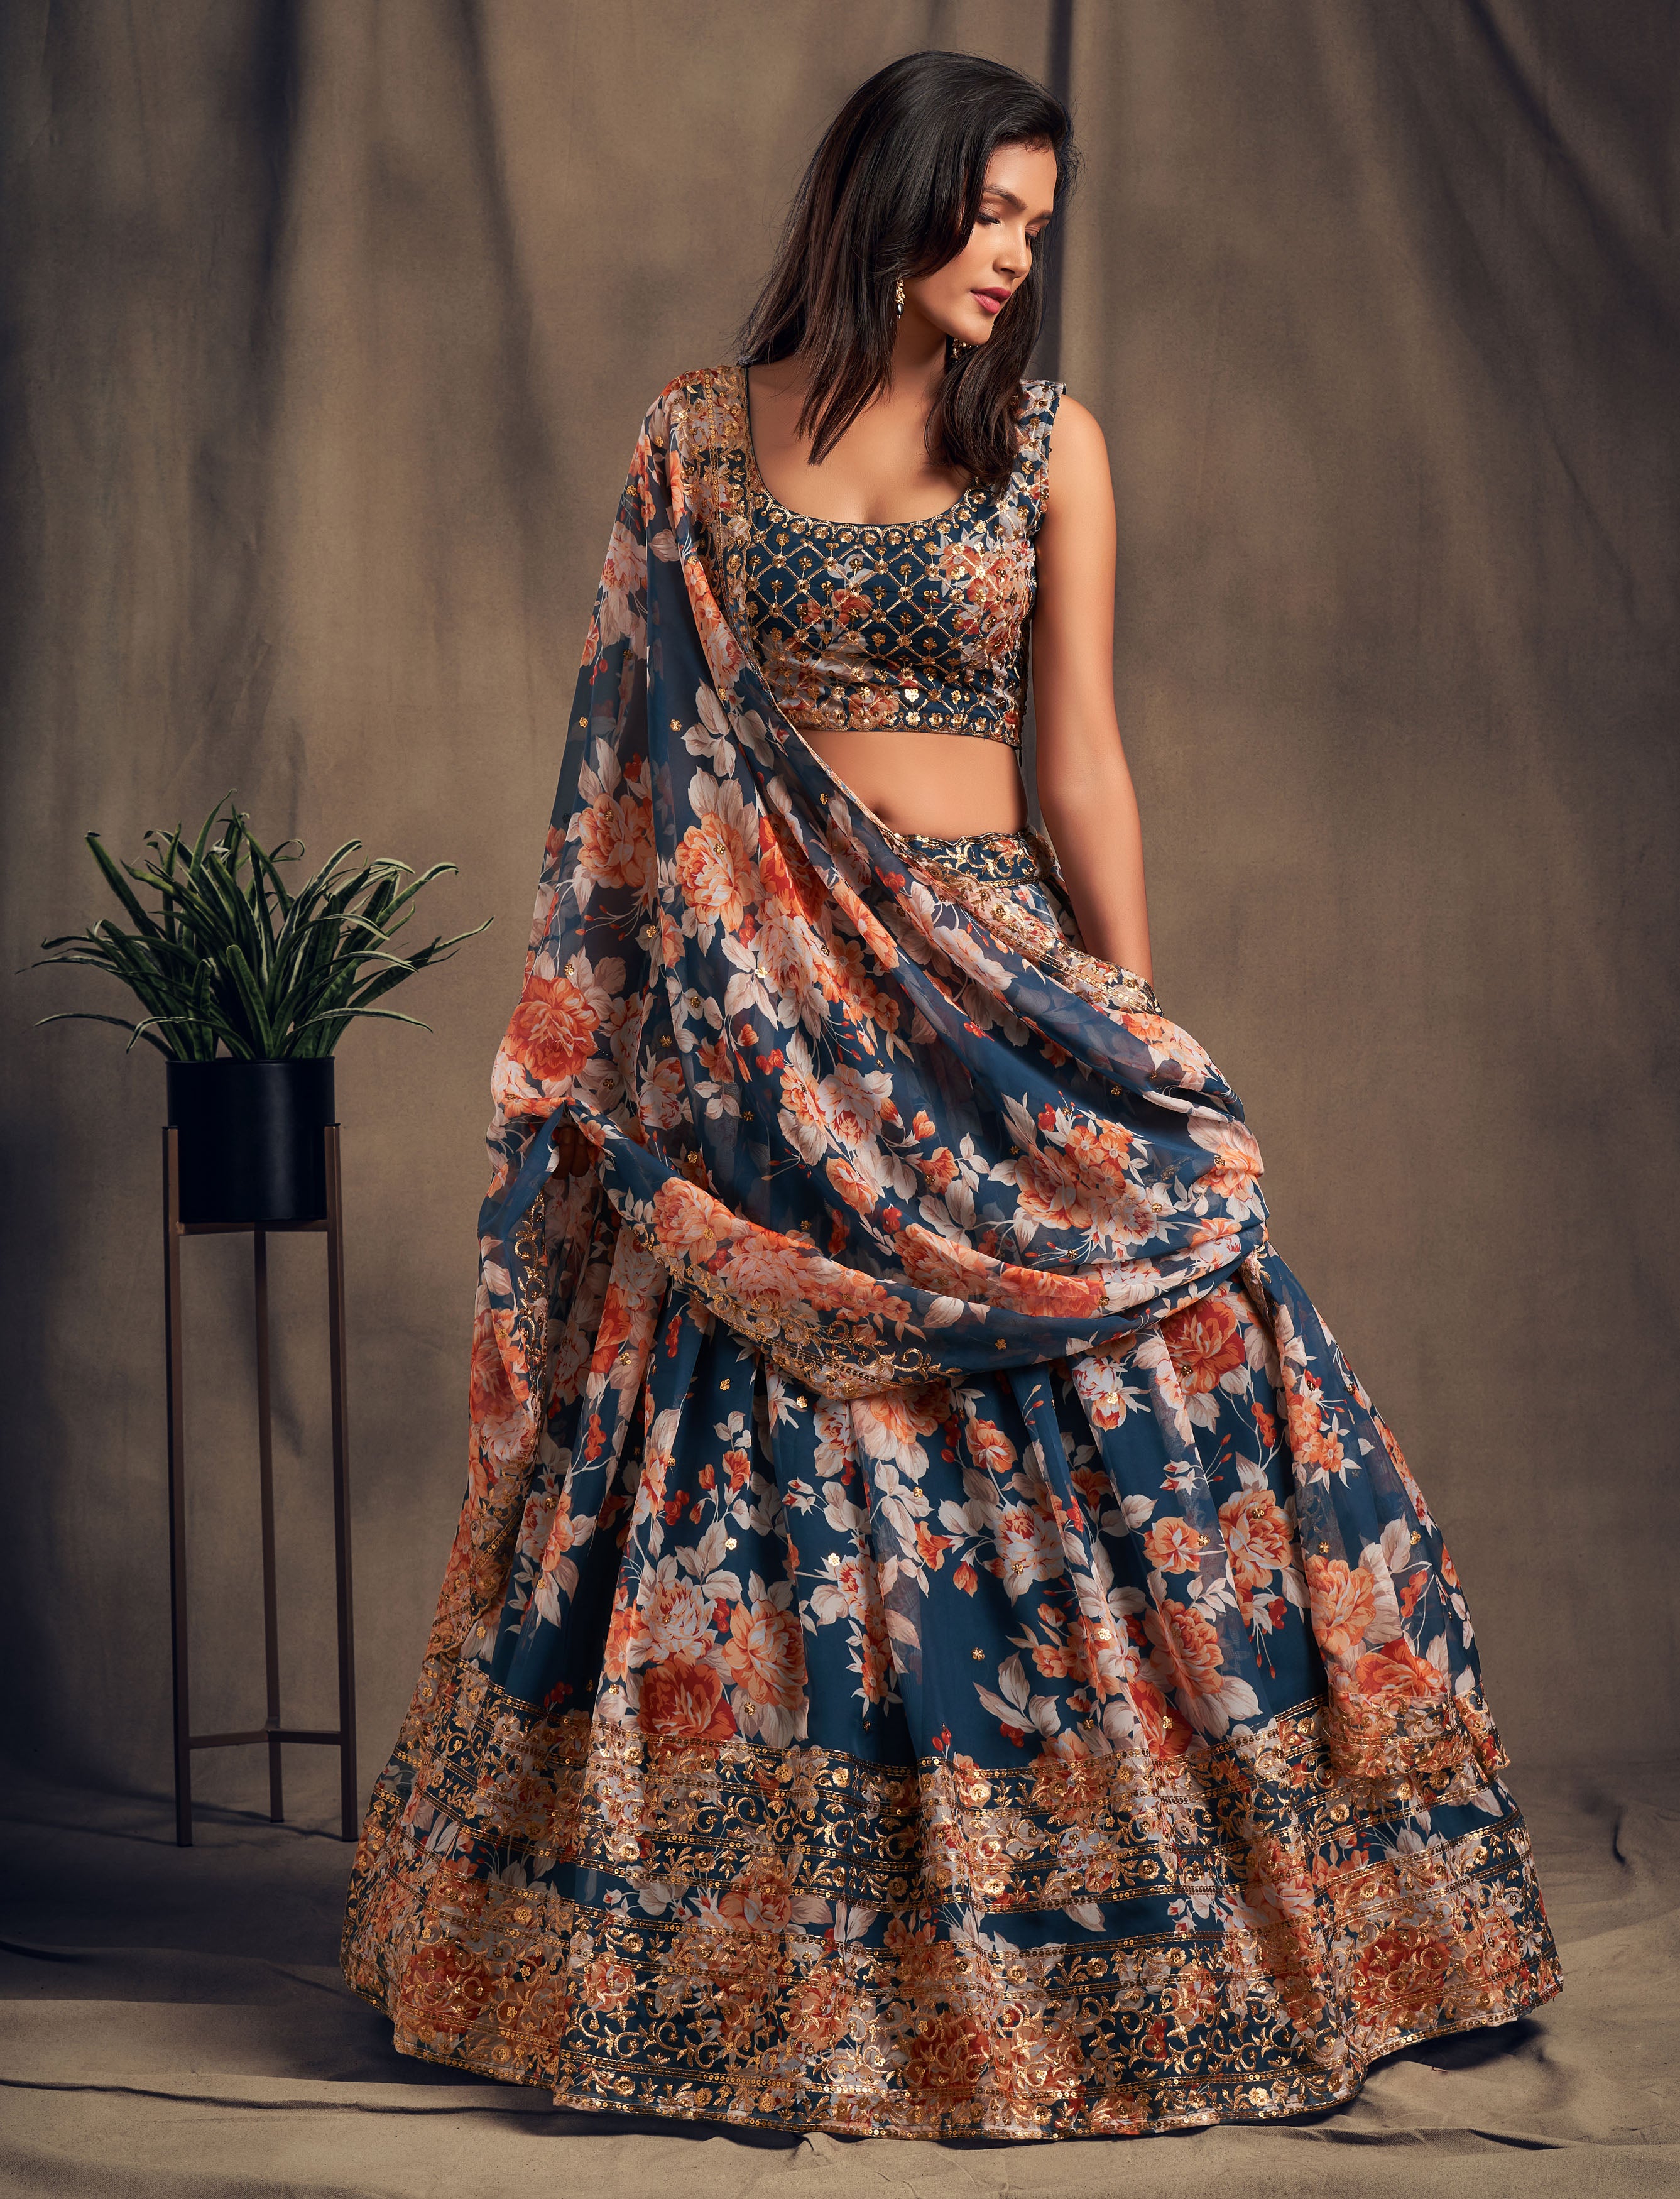 Round Silk Designer Bridal Lehenga, Size: Free at Rs 2000 in New Delhi |  ID: 21829519288